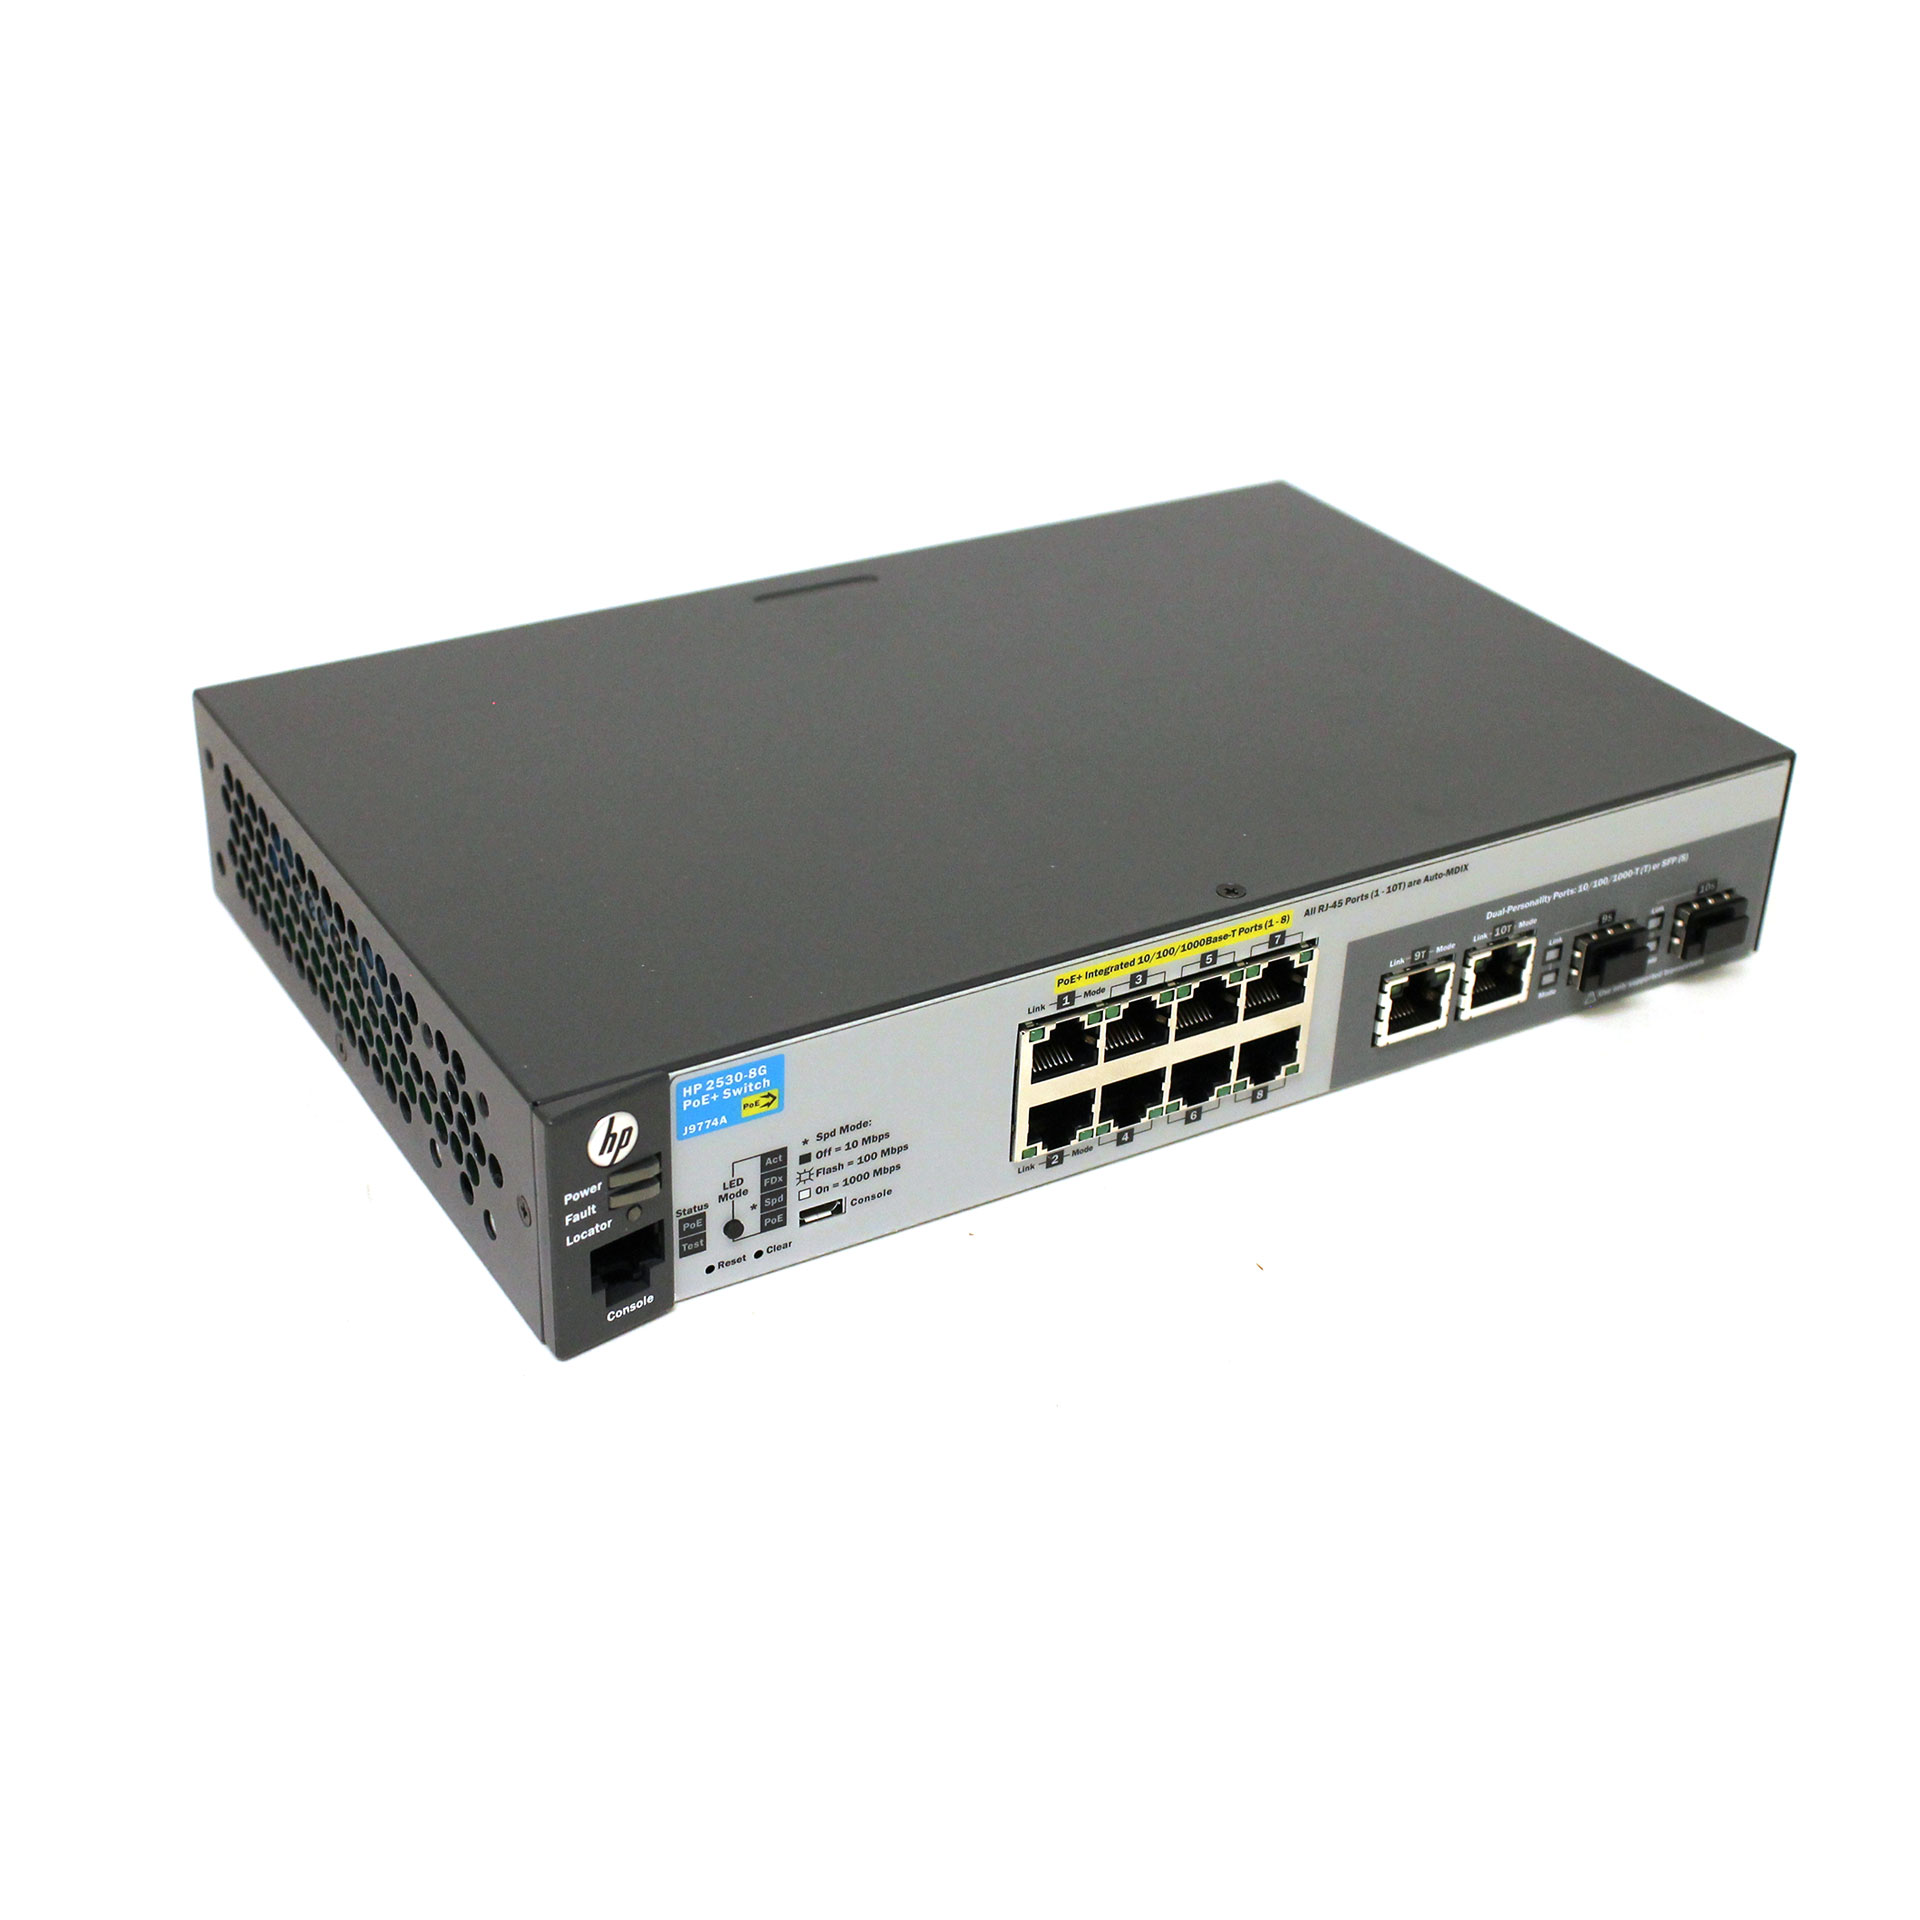 Ethernet Network Switch P/N HP Aruba 2530-8G-PoE J9774A#ABA 8-Port PoE 